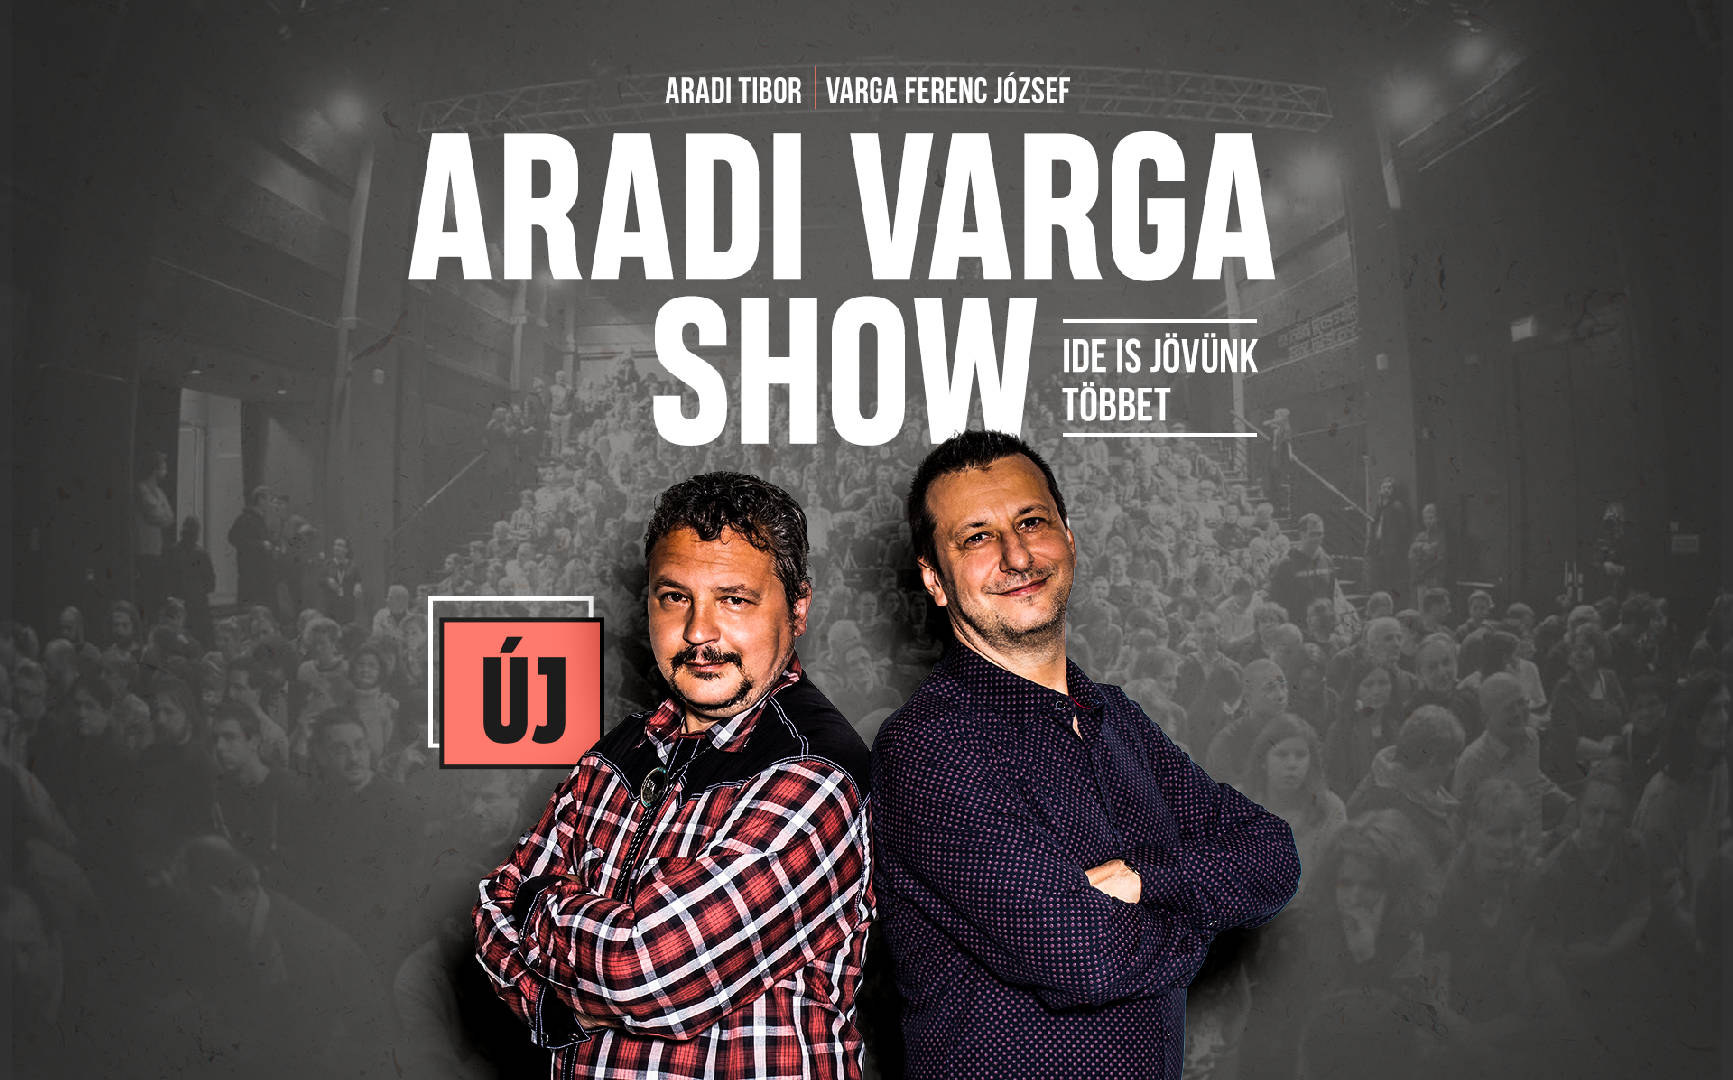 ÚJ Aradi Varga Show Celldömölkön